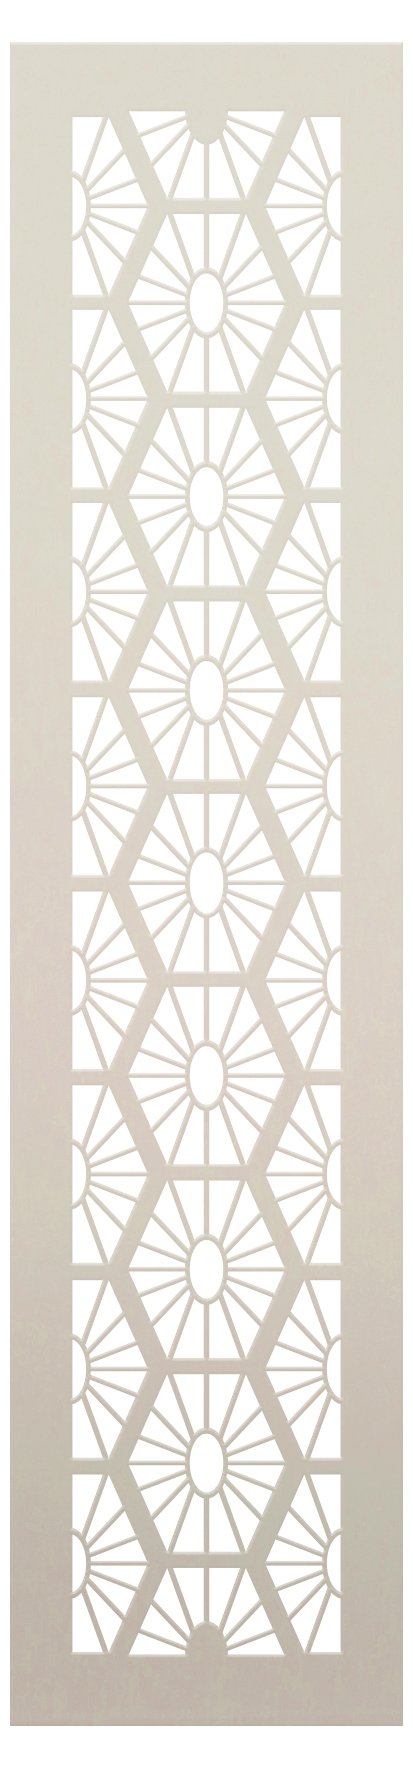 Chinese Elongated Sunburst Hexagon Band Stencil by StudioR12 | Craft DIY Sun Backsplash Pattern Home Decor | Paint Wood Sign Border | Select Size | STCL5820